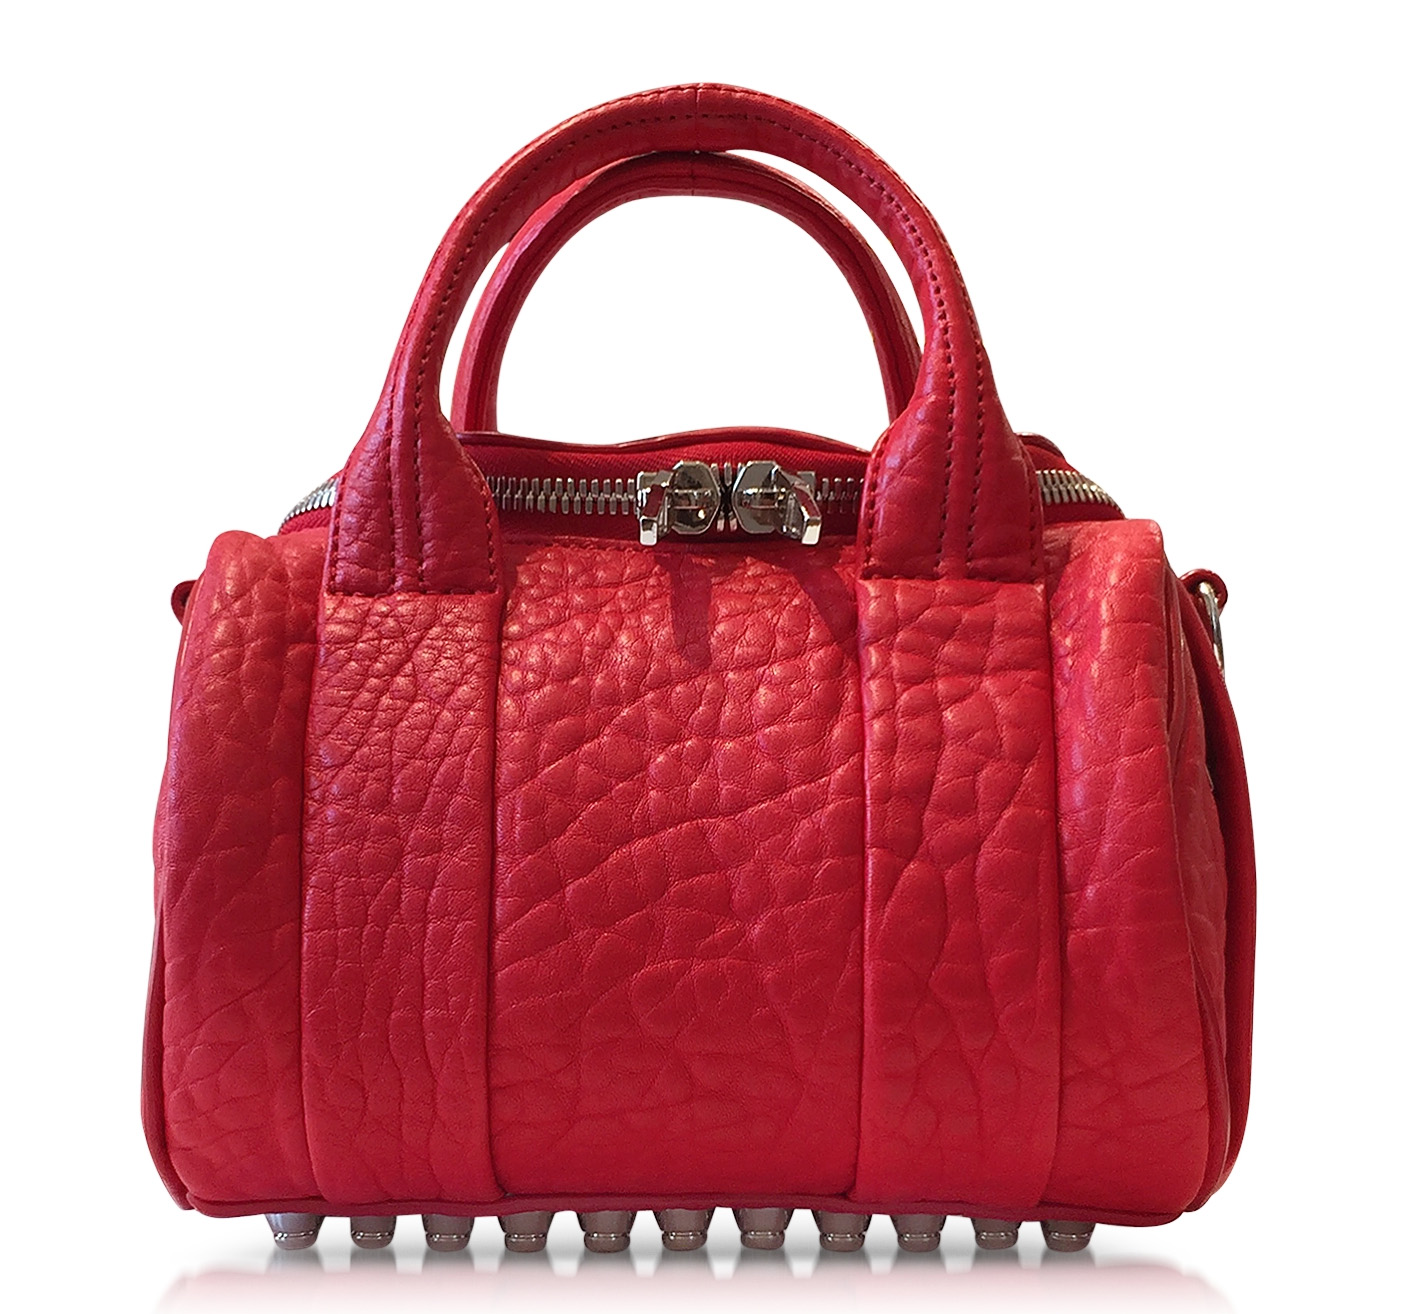 Designer handbags - Alexander Wang Mini Rockie Coral Pebbled Leather Satchel